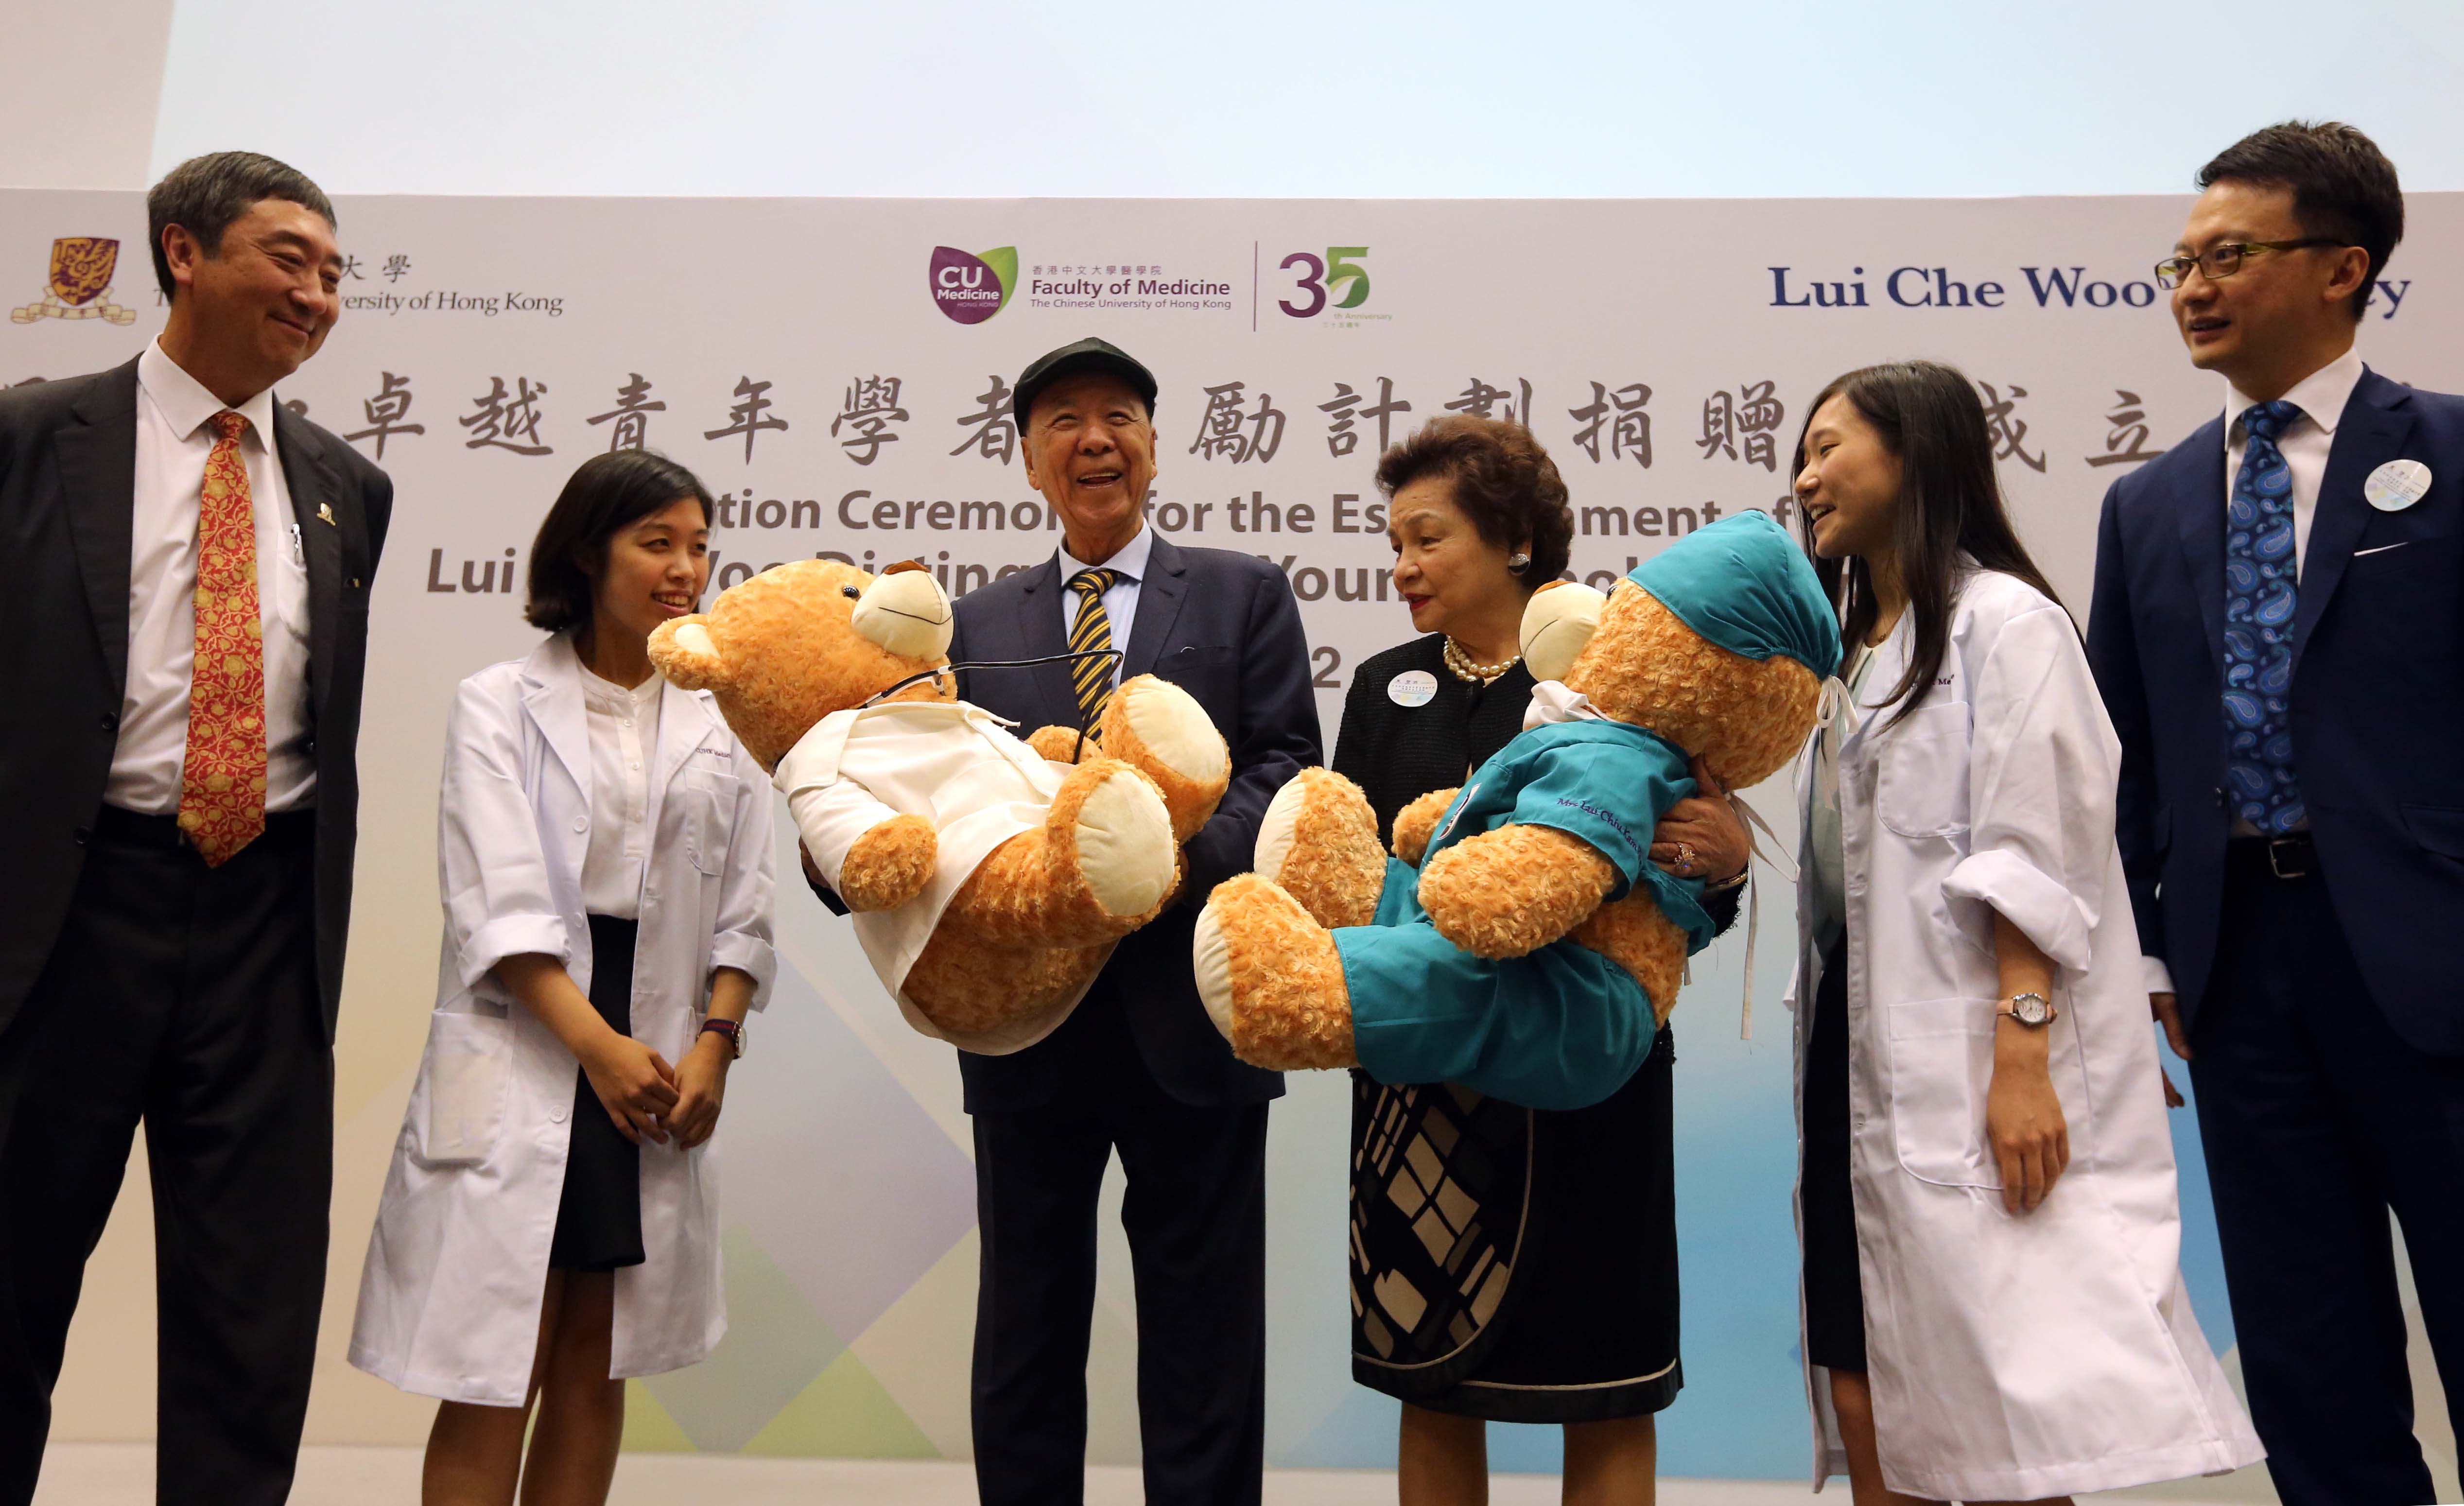 Student representatives present mascots of CUHK Faculty of Medicine